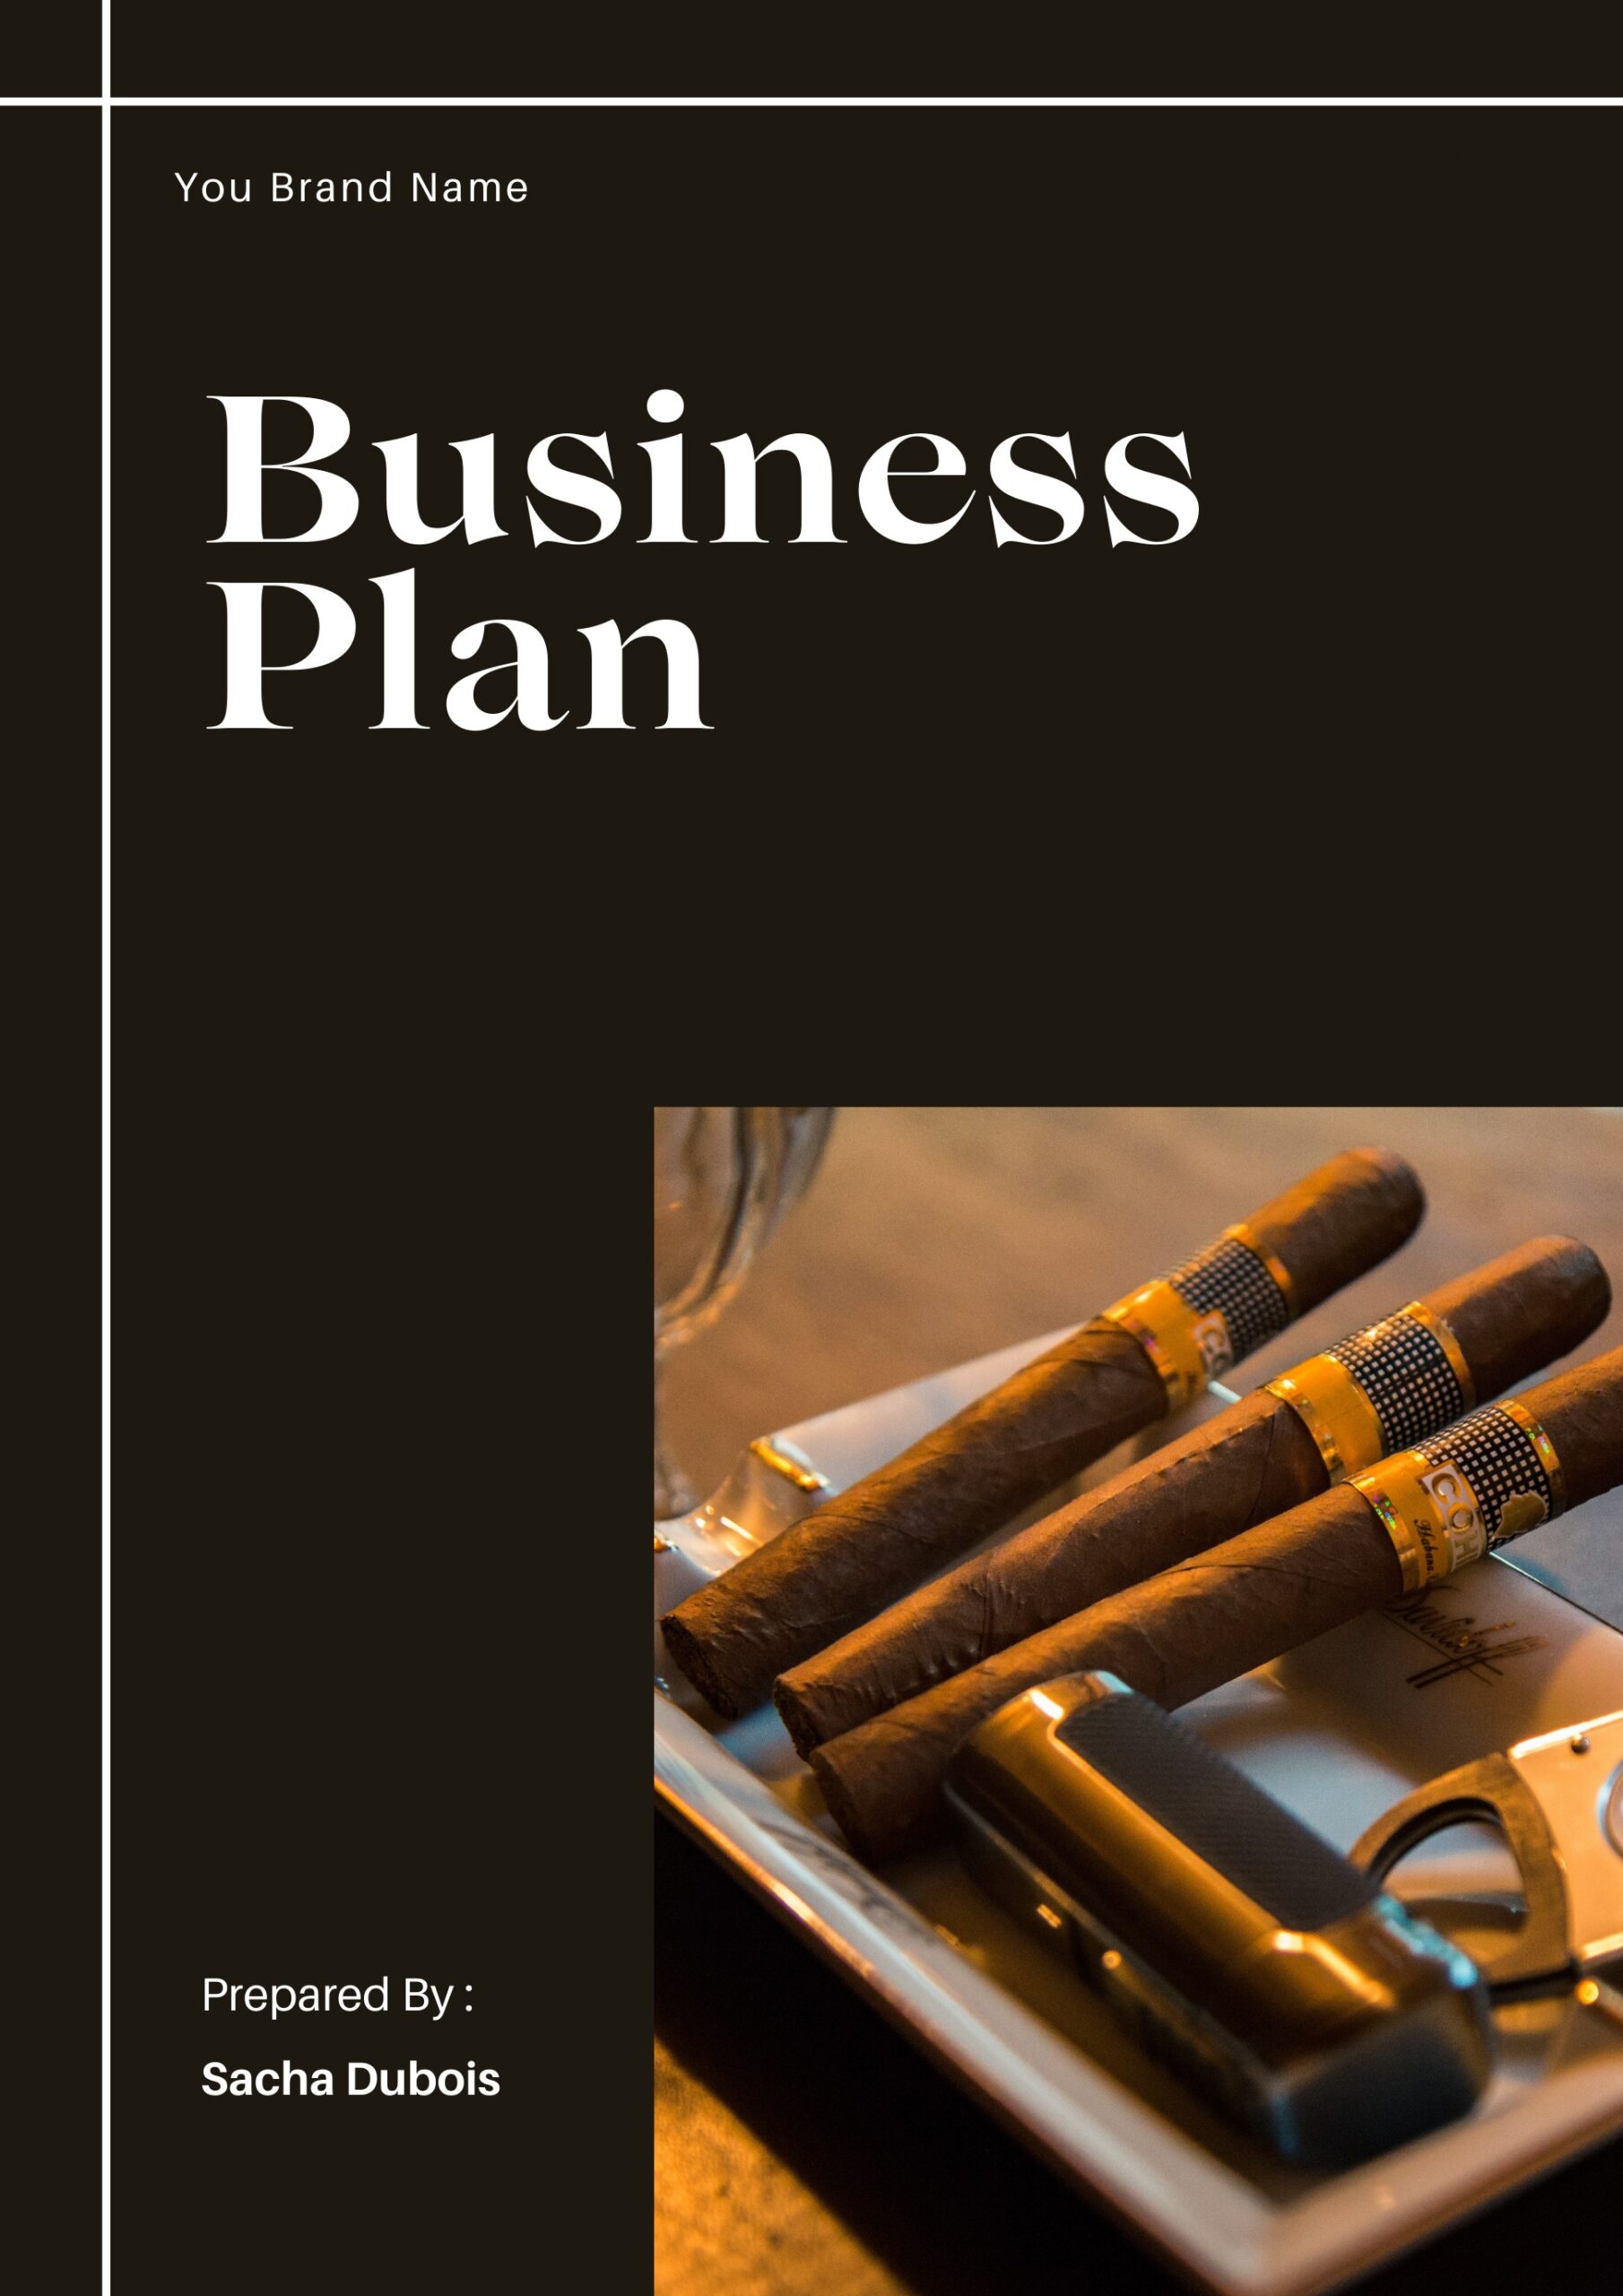 sample business plan for cigar lounge